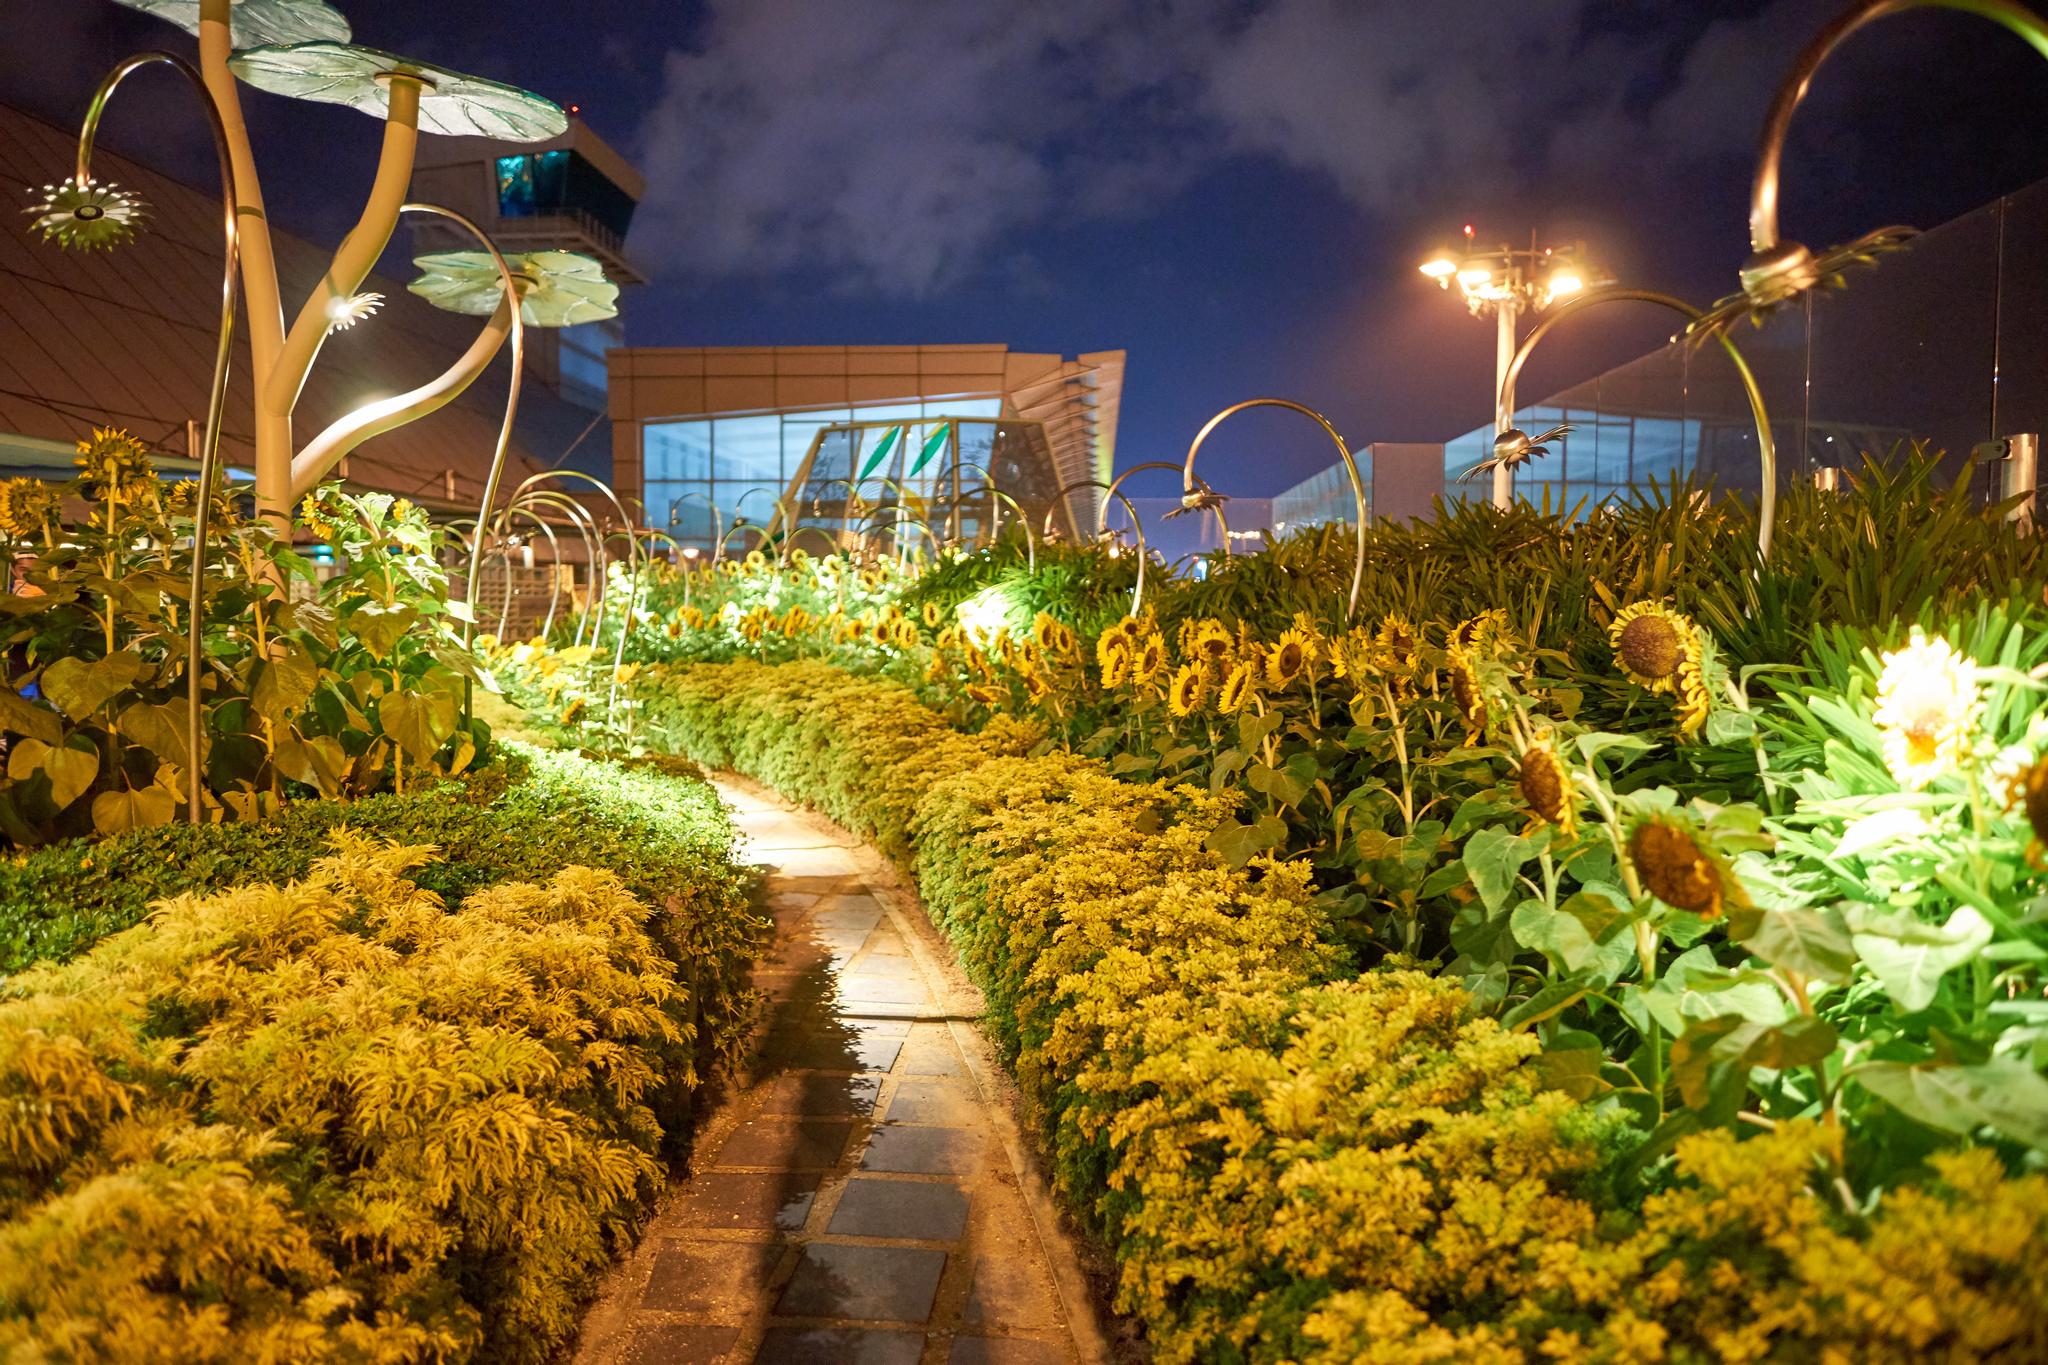 Changi Airport has its own sunflower garden